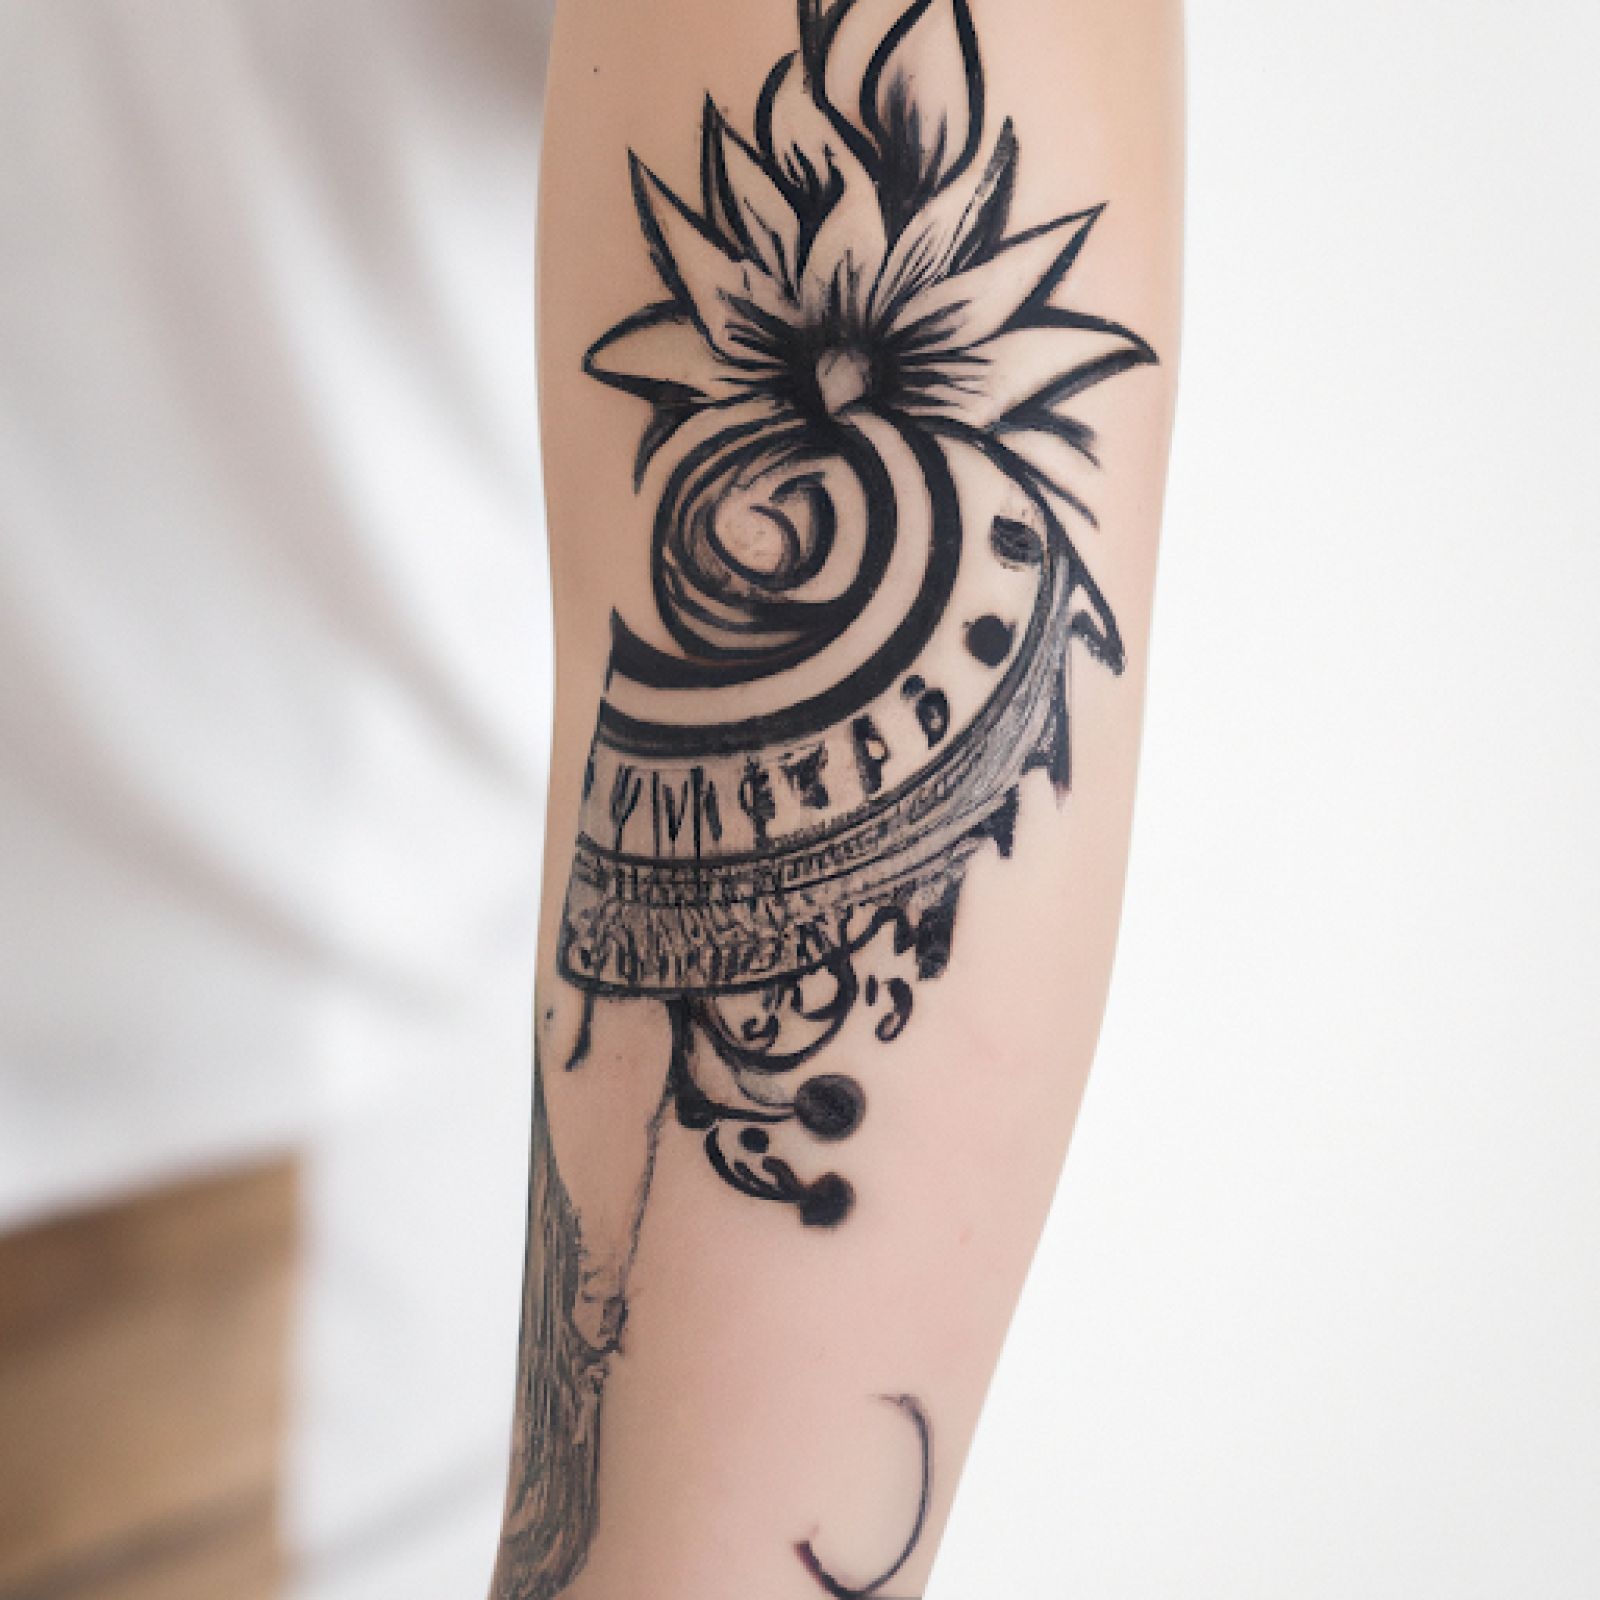 Mandala tattoo on arm for women